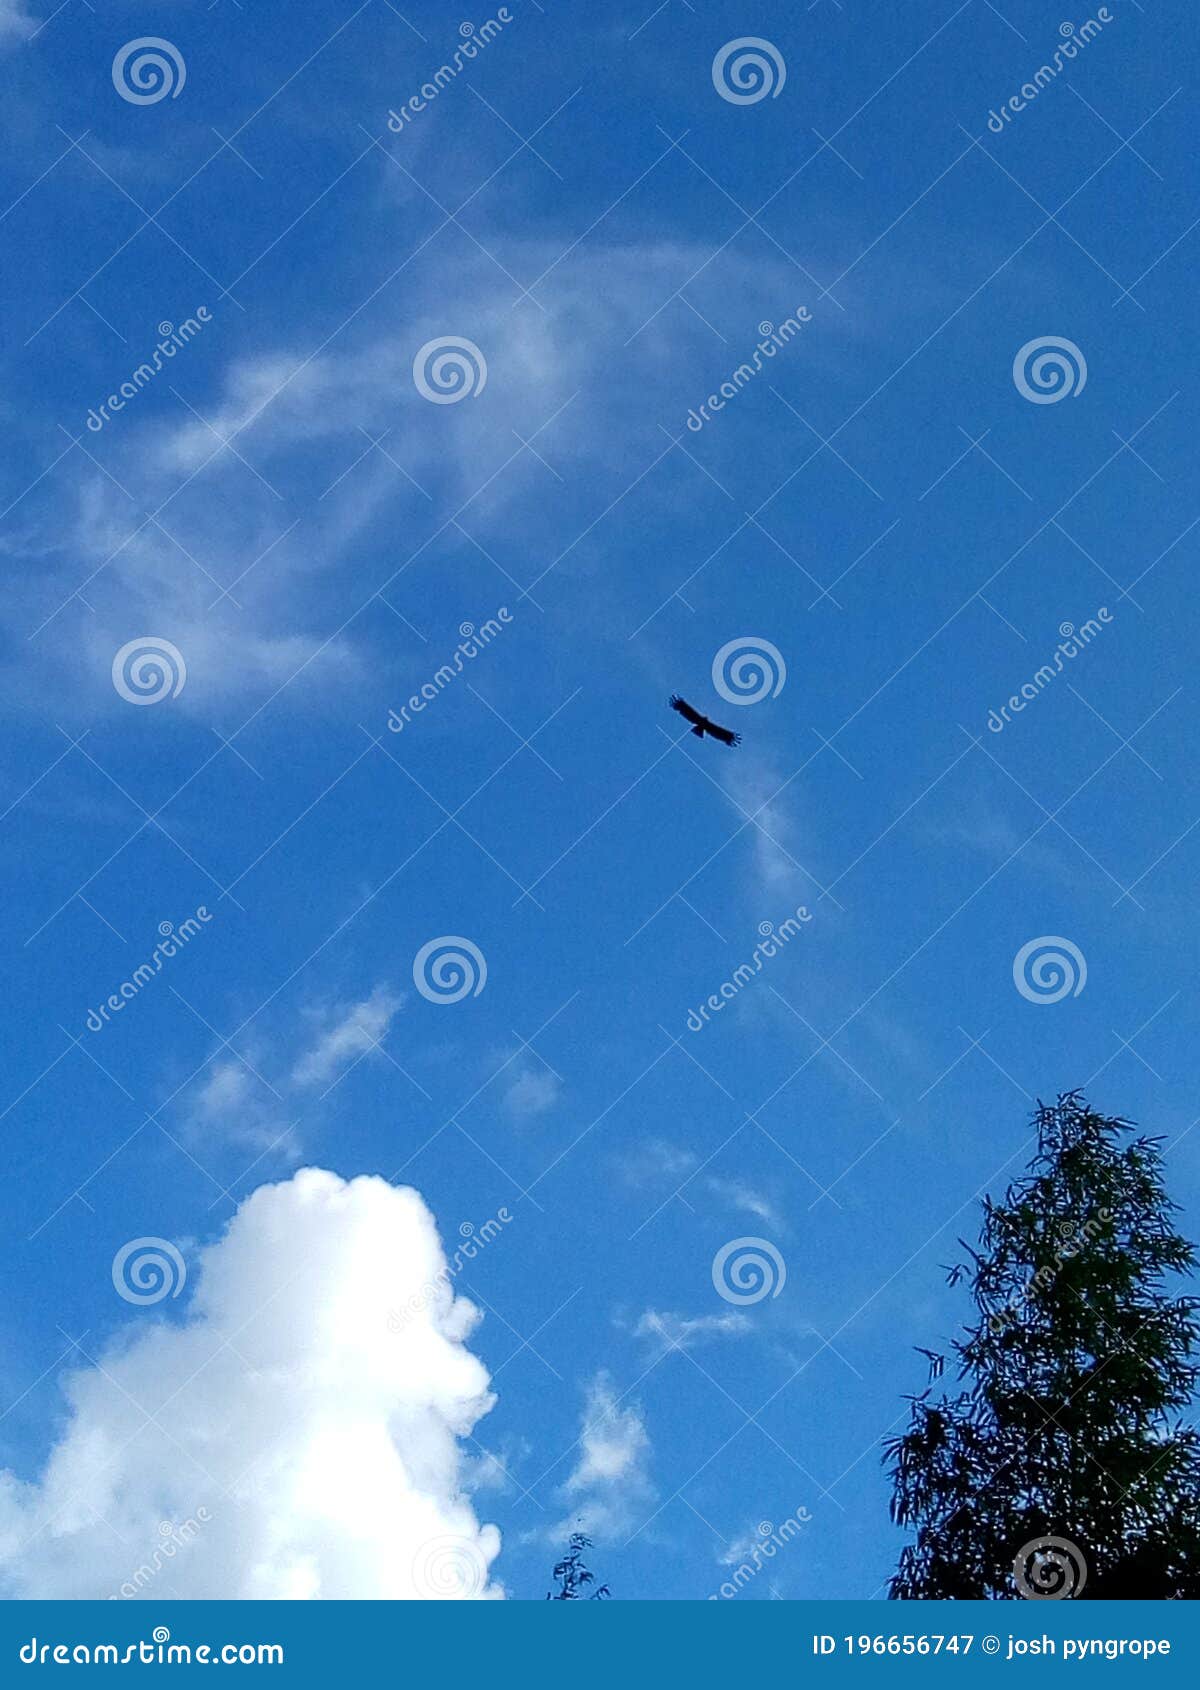 raptors bird on the blue sky